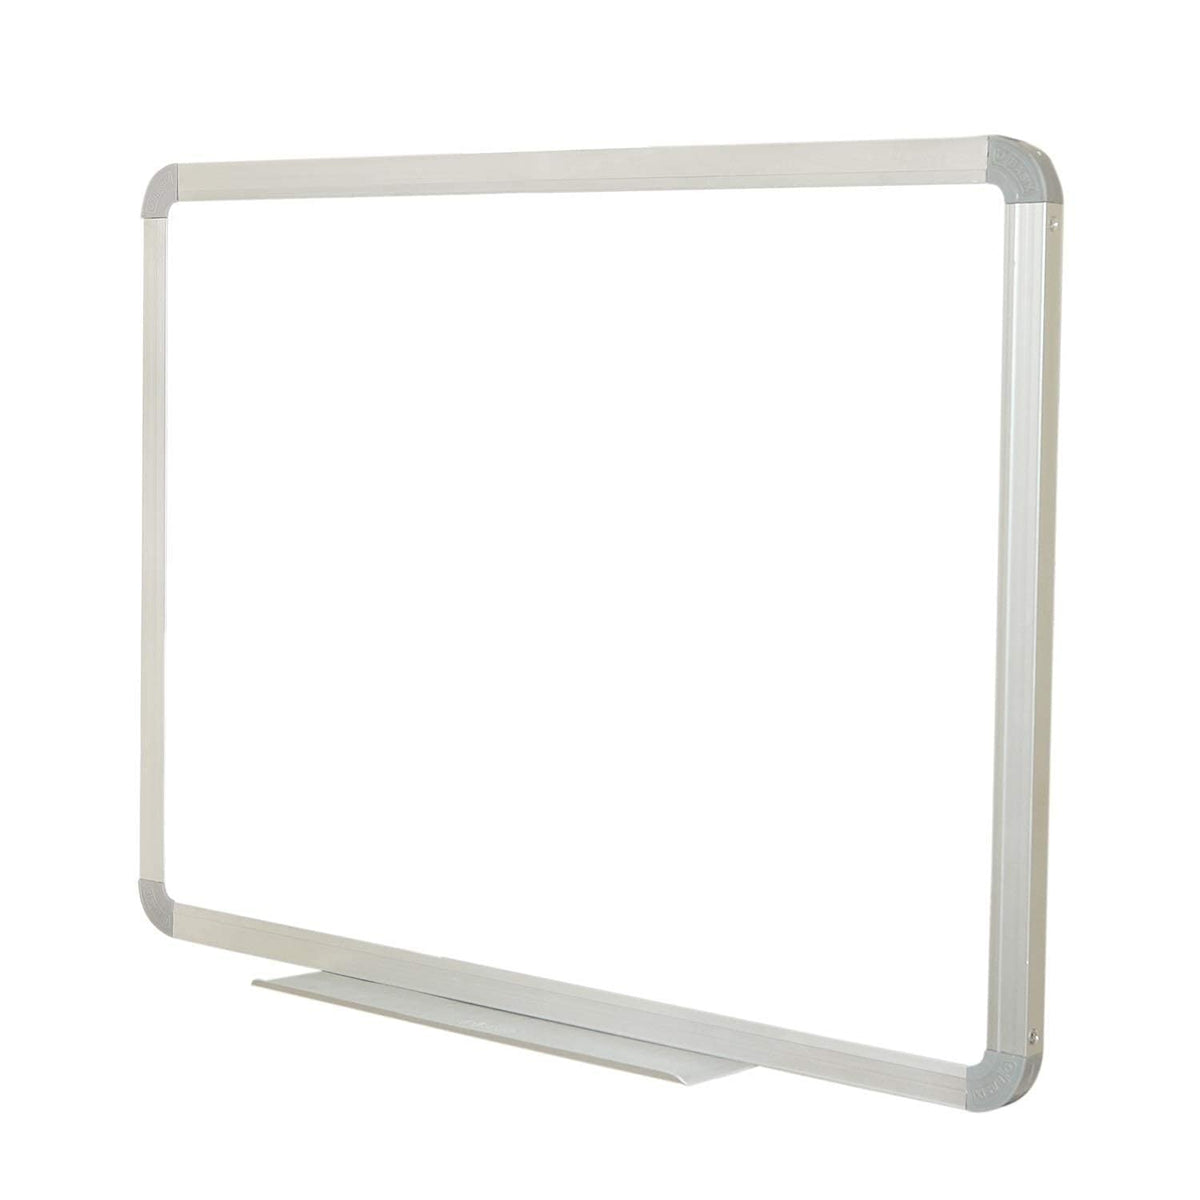 OBASIX® Superior Series White Board 1.5x2 Feet Non-Magnetic | Heavy Aluminium Frame Natural Finesse SWB4560